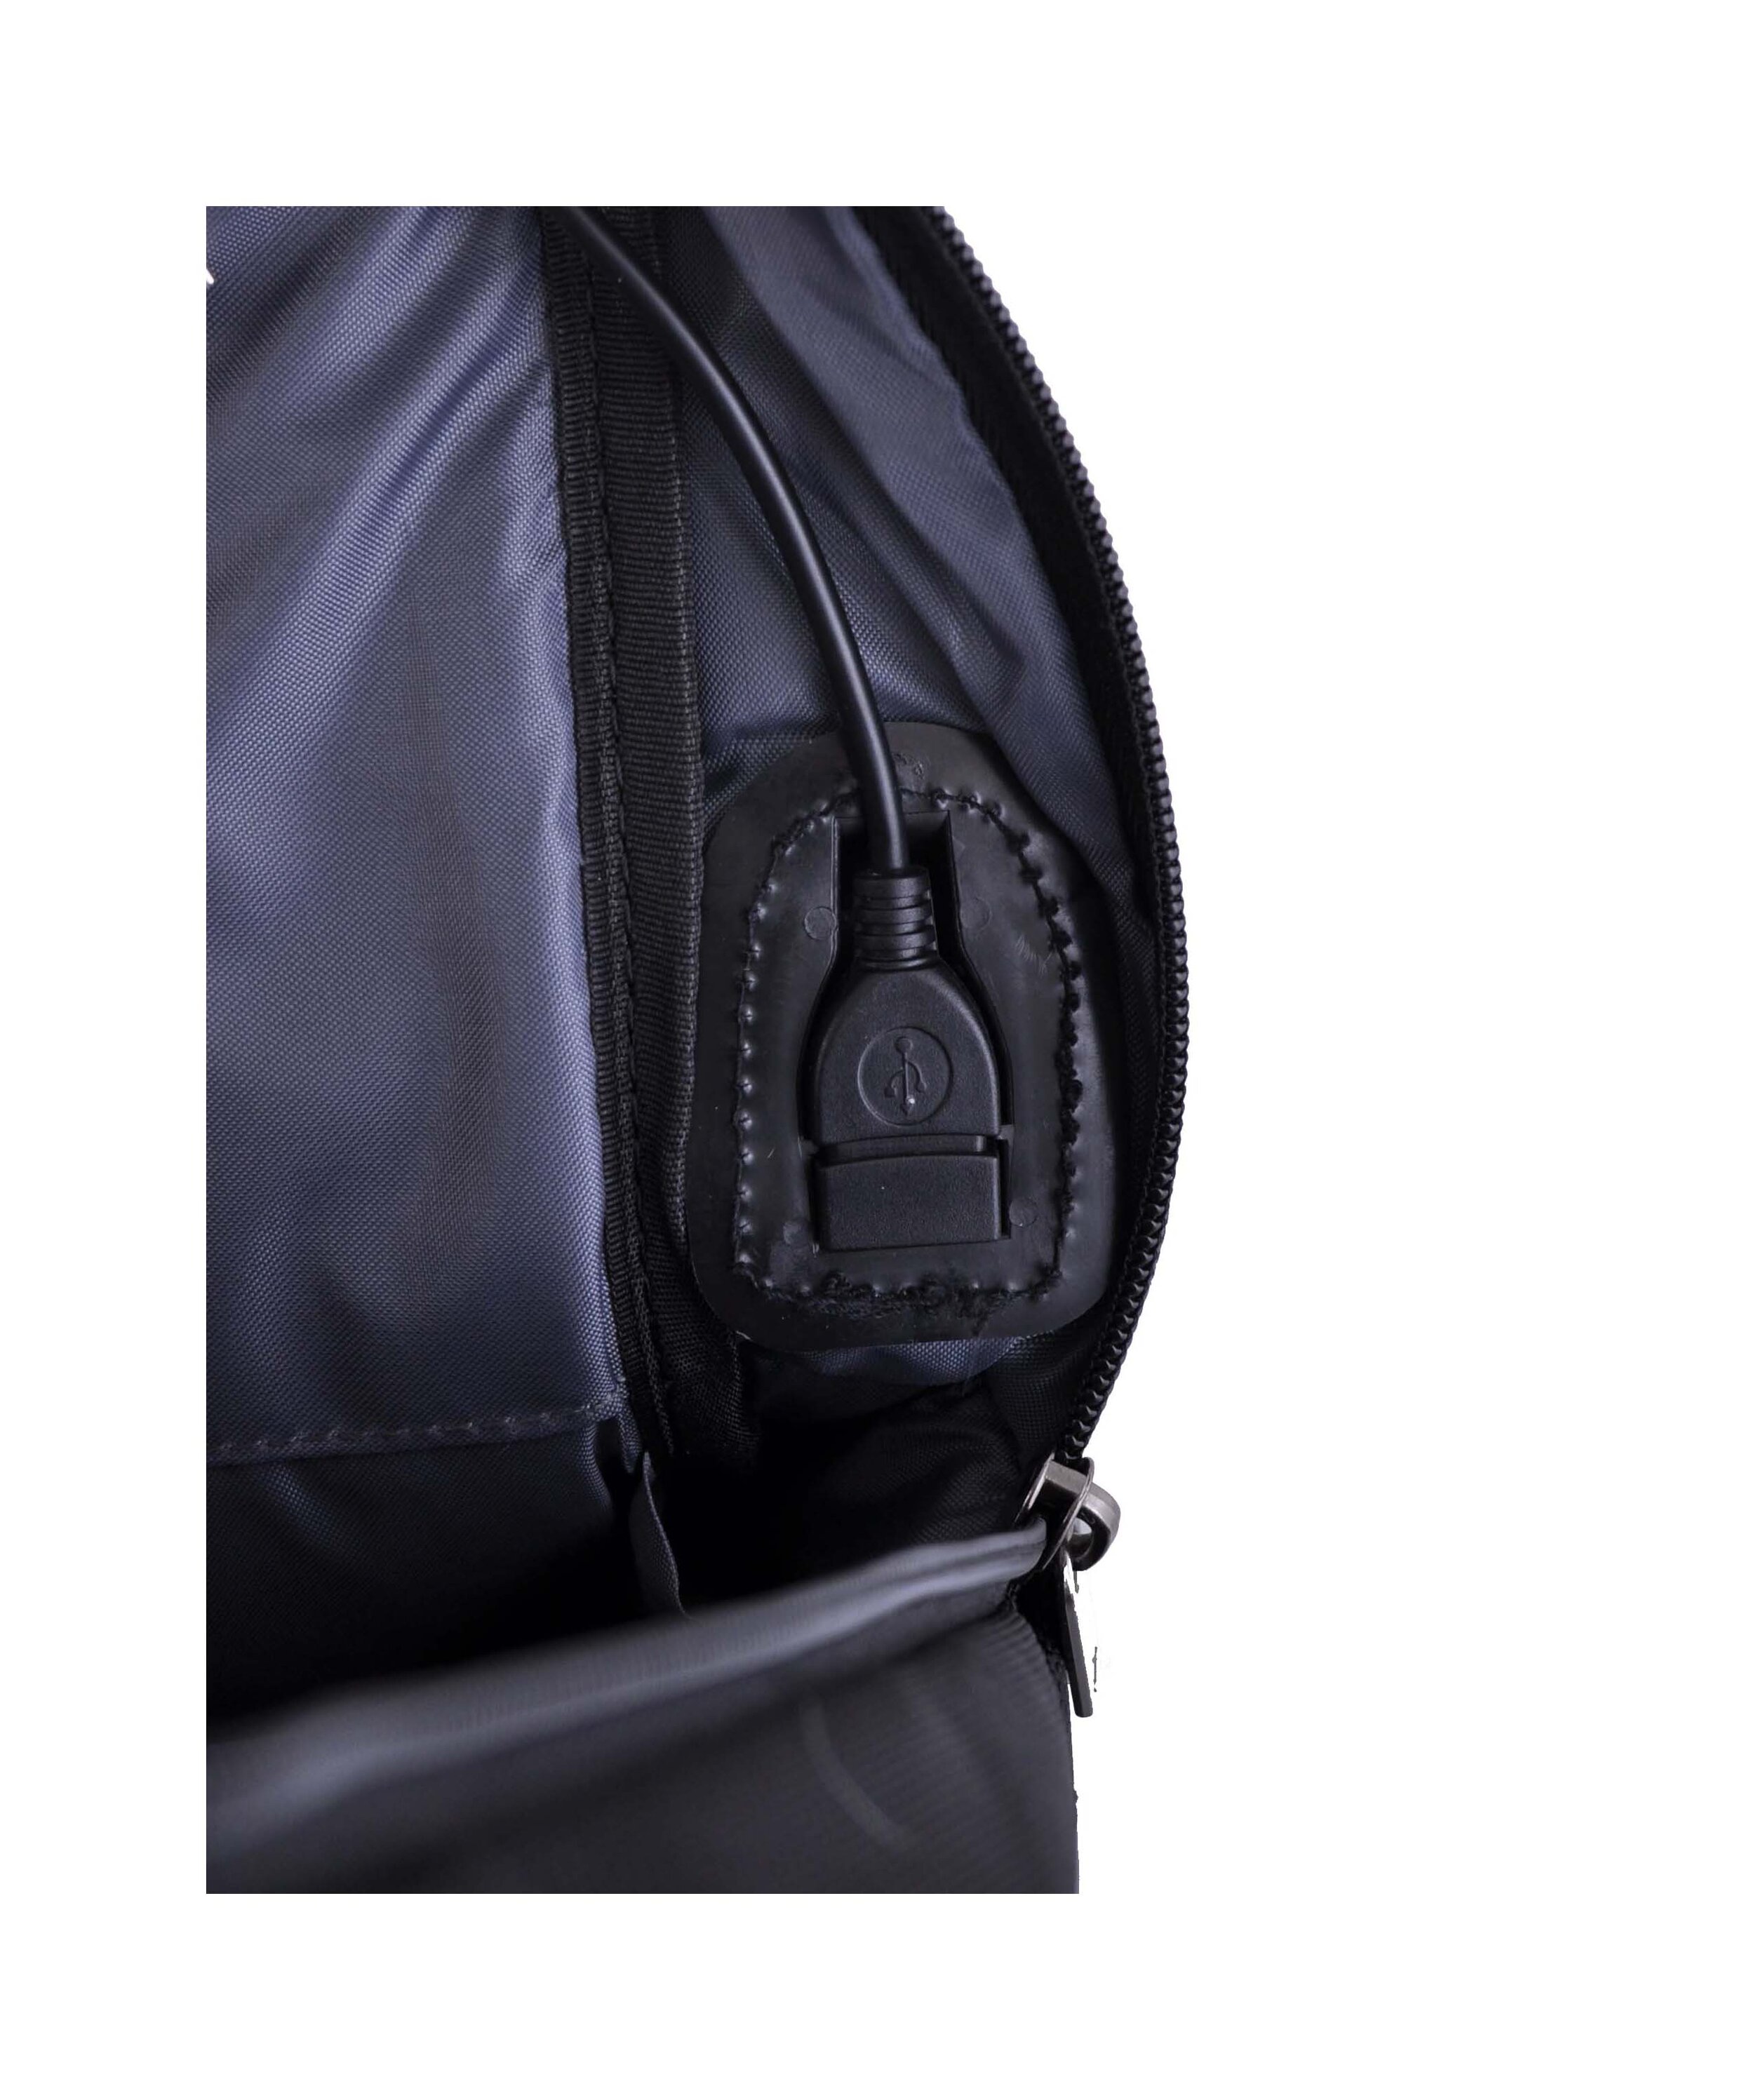 Mi-Pac Backpacks Prime One Size Black Croc